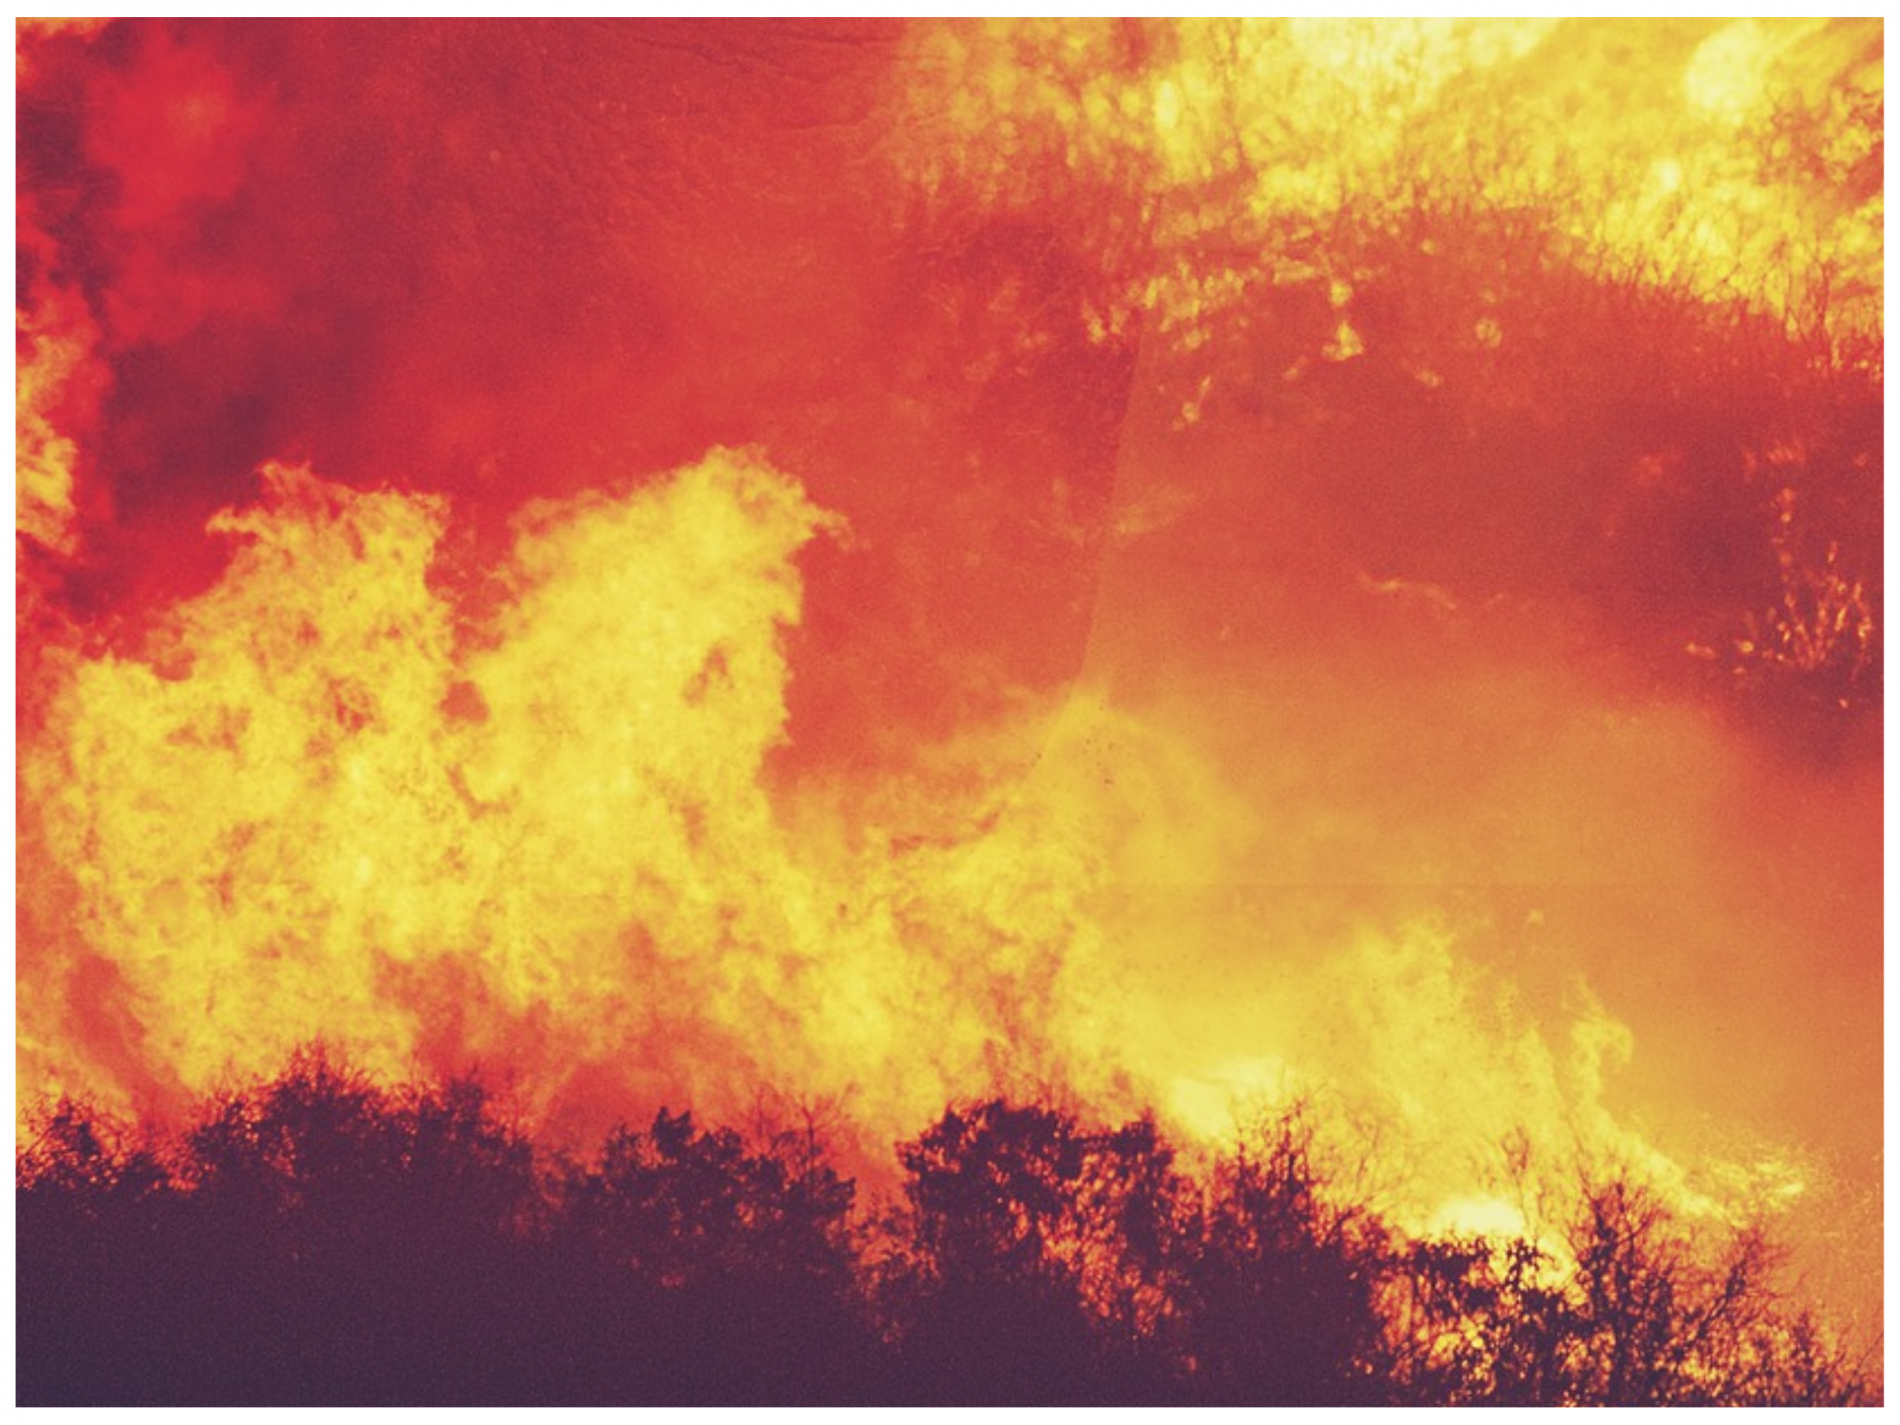 Wildfires are ravaging vineyards